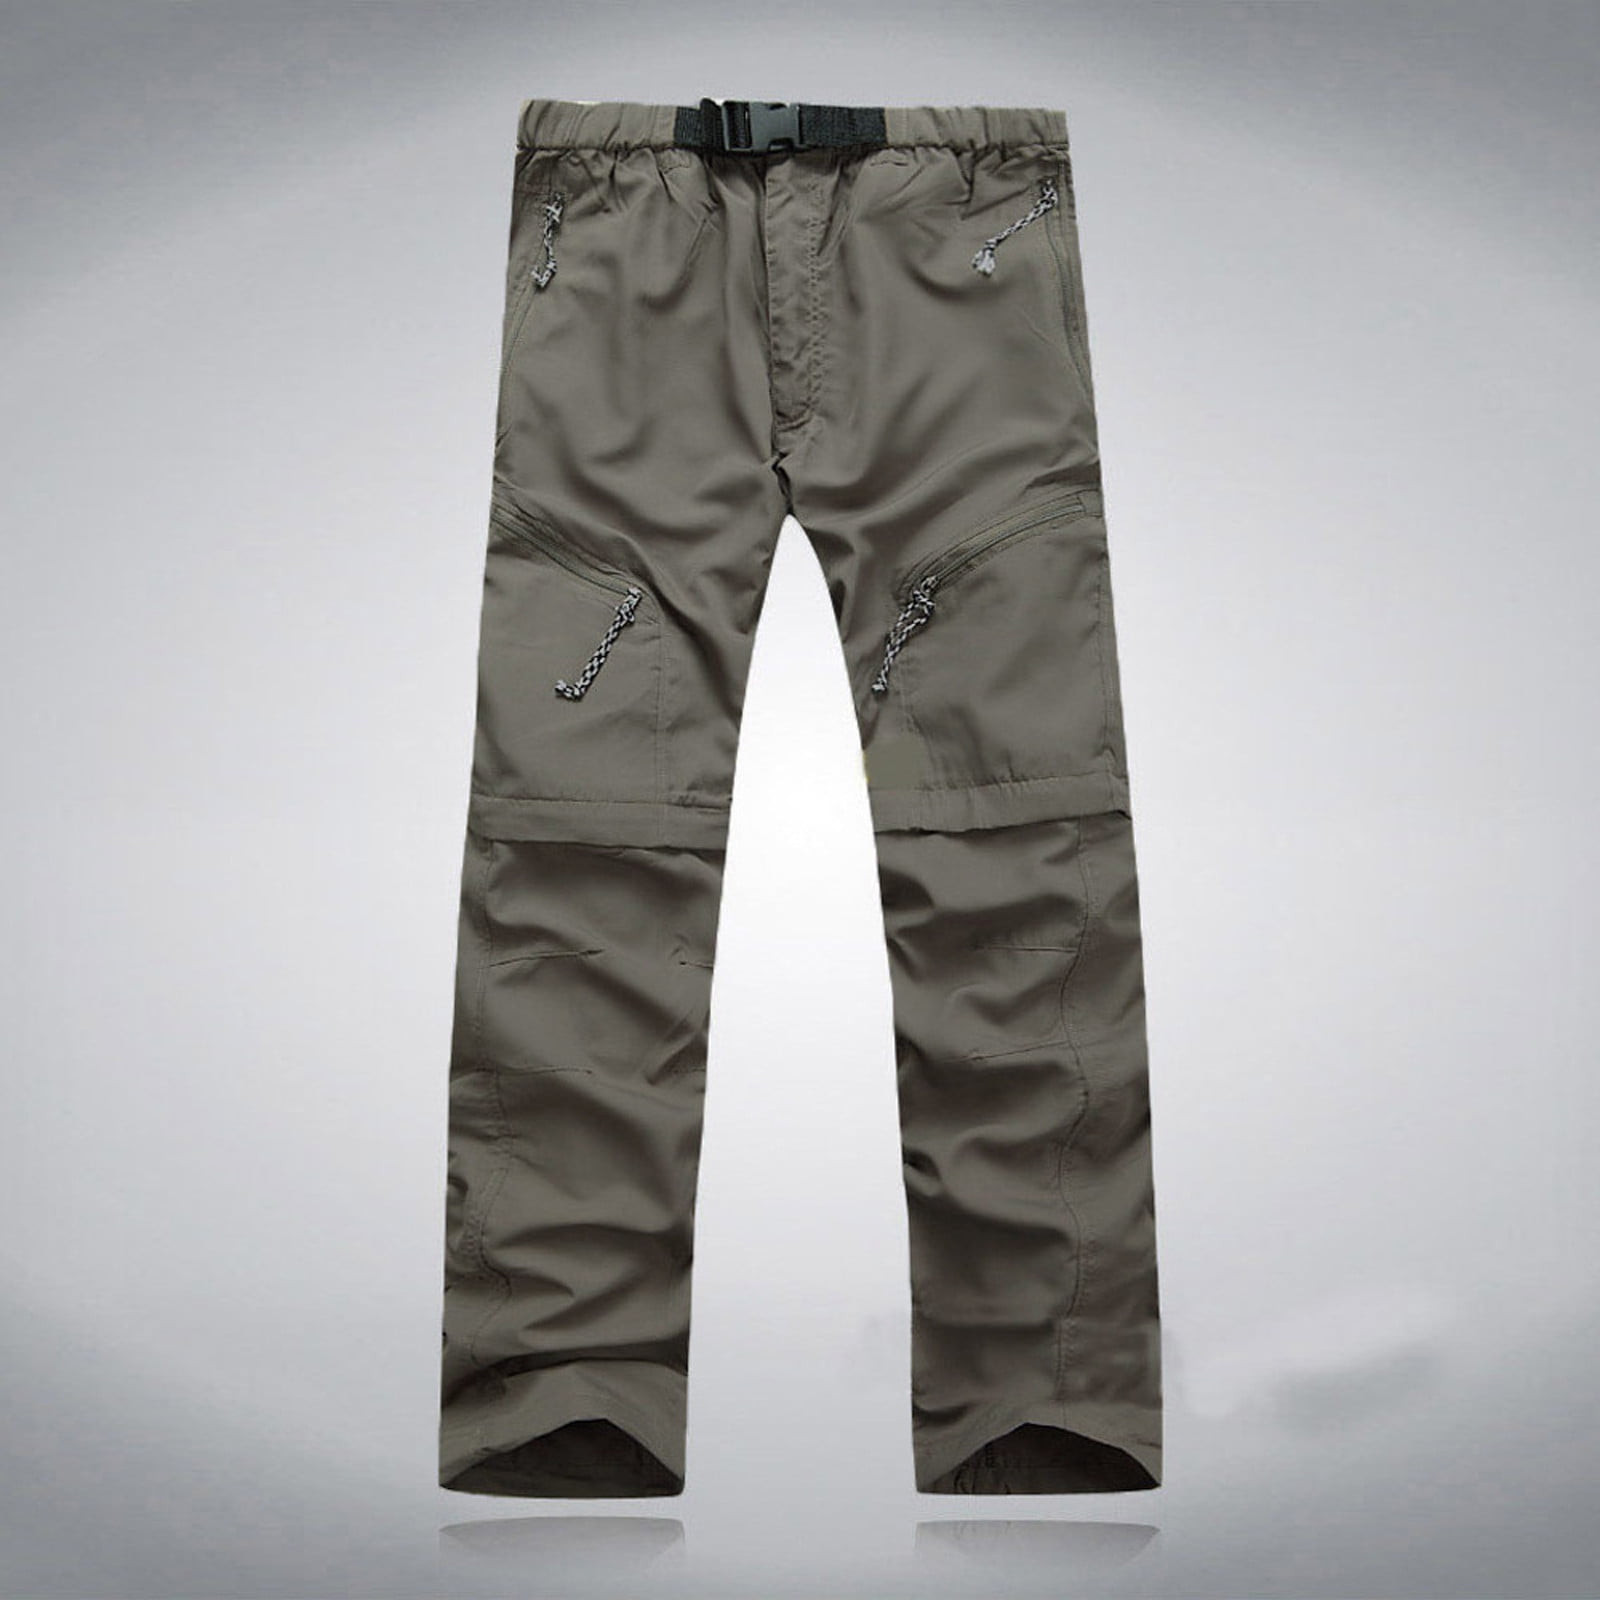 Herrnalise Men's Hiking Pants Convertible Quick Dry Lightweight Zip Outdoor  Fishing Travel Safari Pants Detachable Short Trousers For Khaki,S